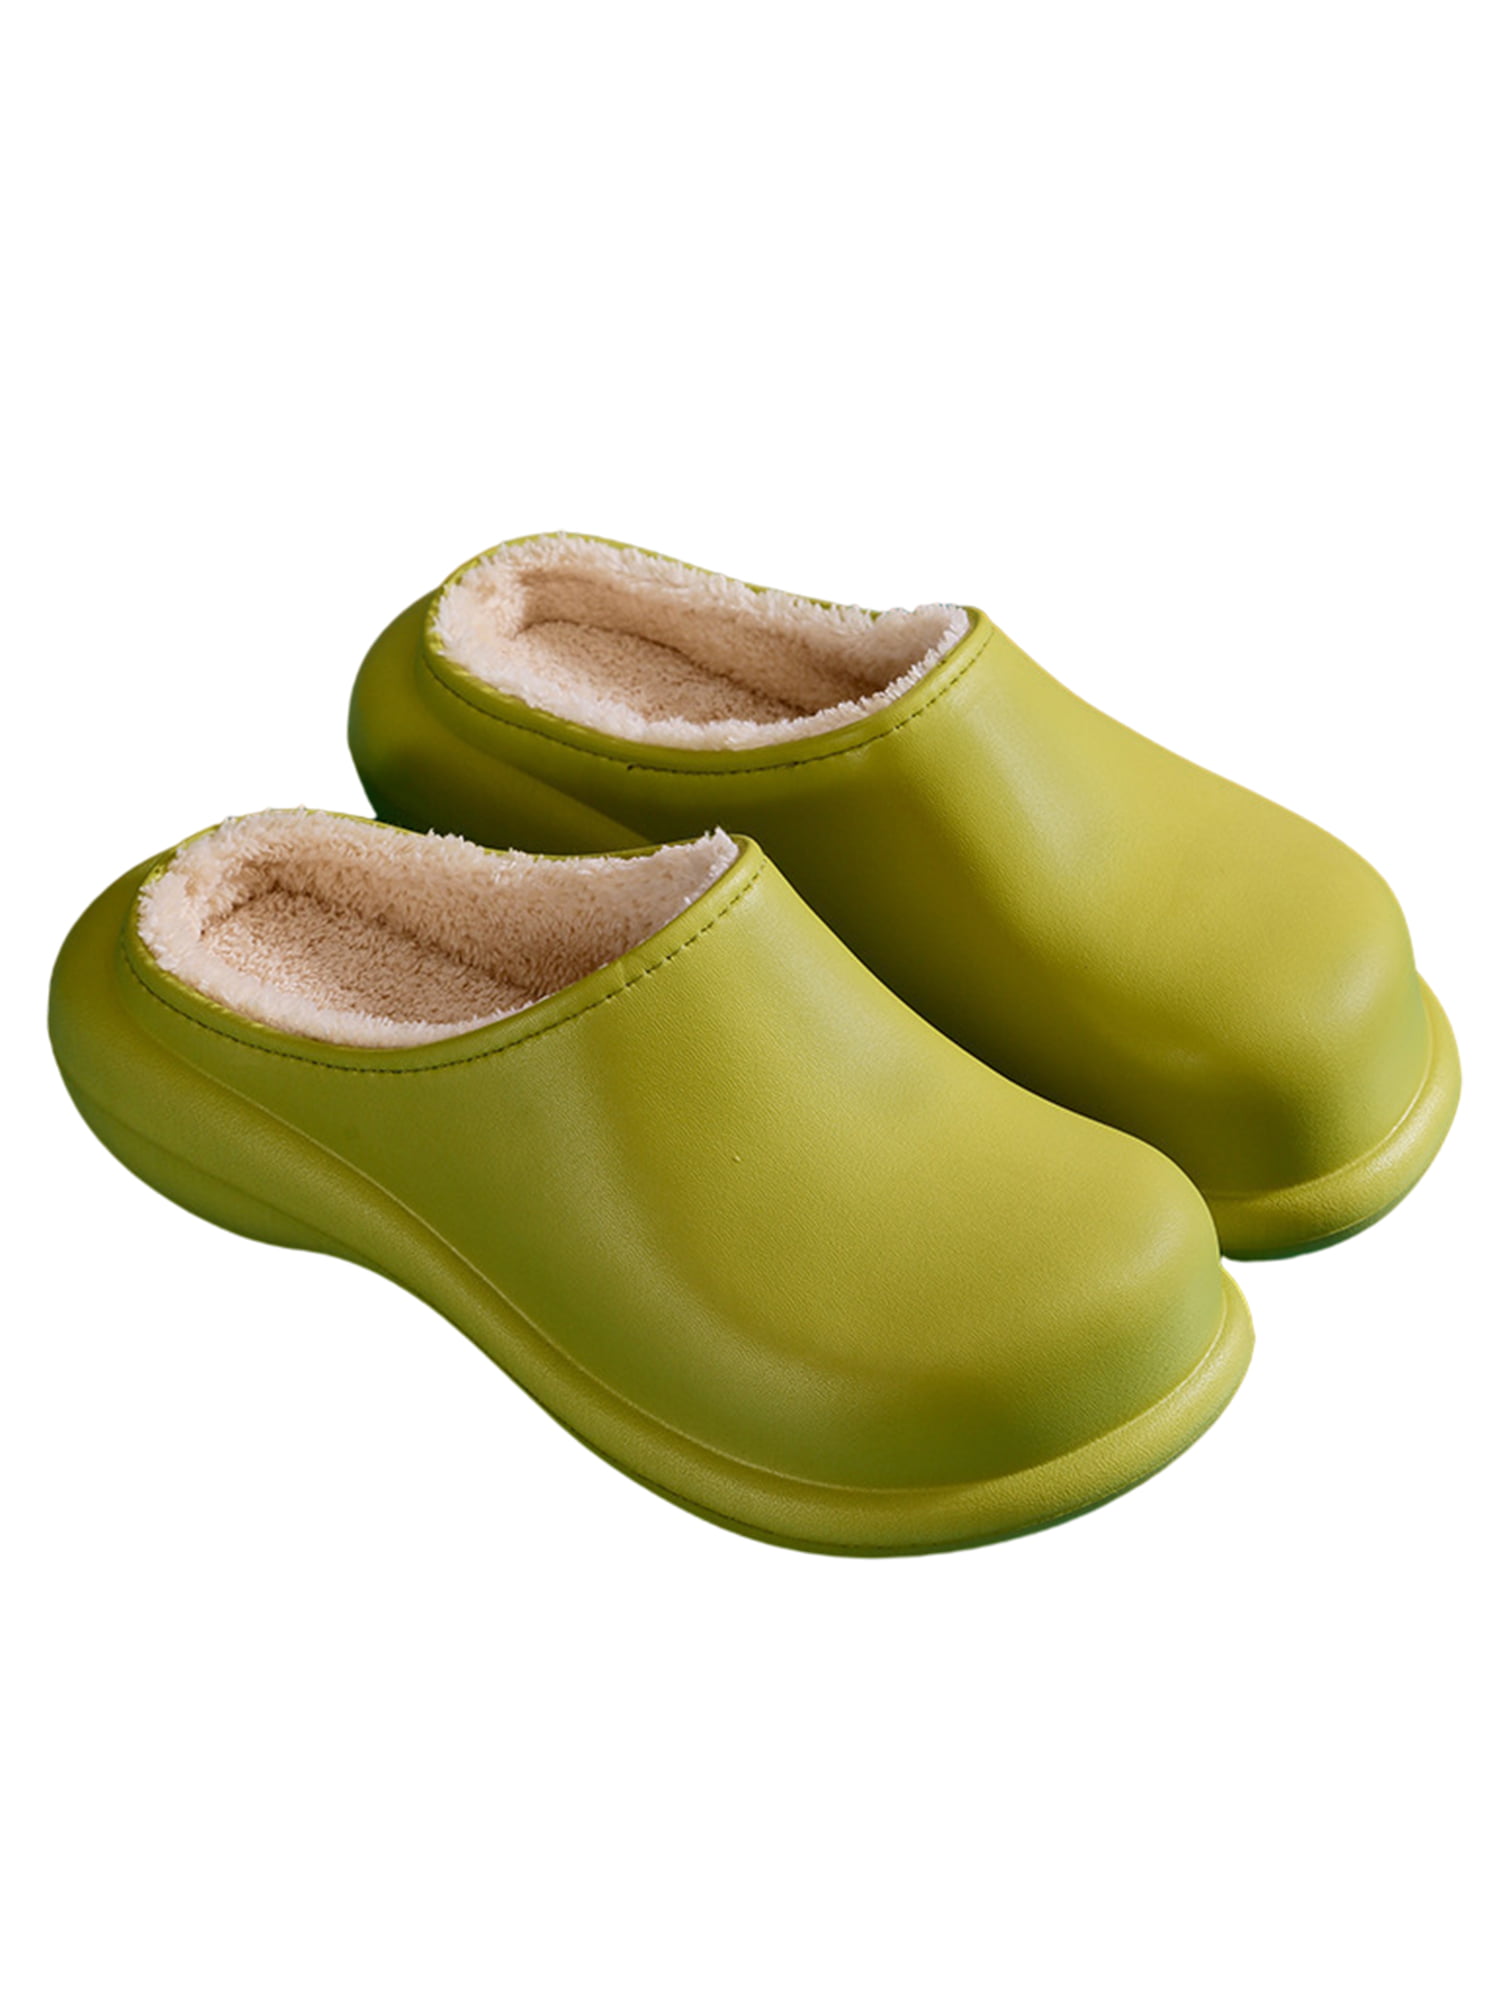 Green Garden Clogs Size 5 Ladies Mens Gardening Shoes Briers 